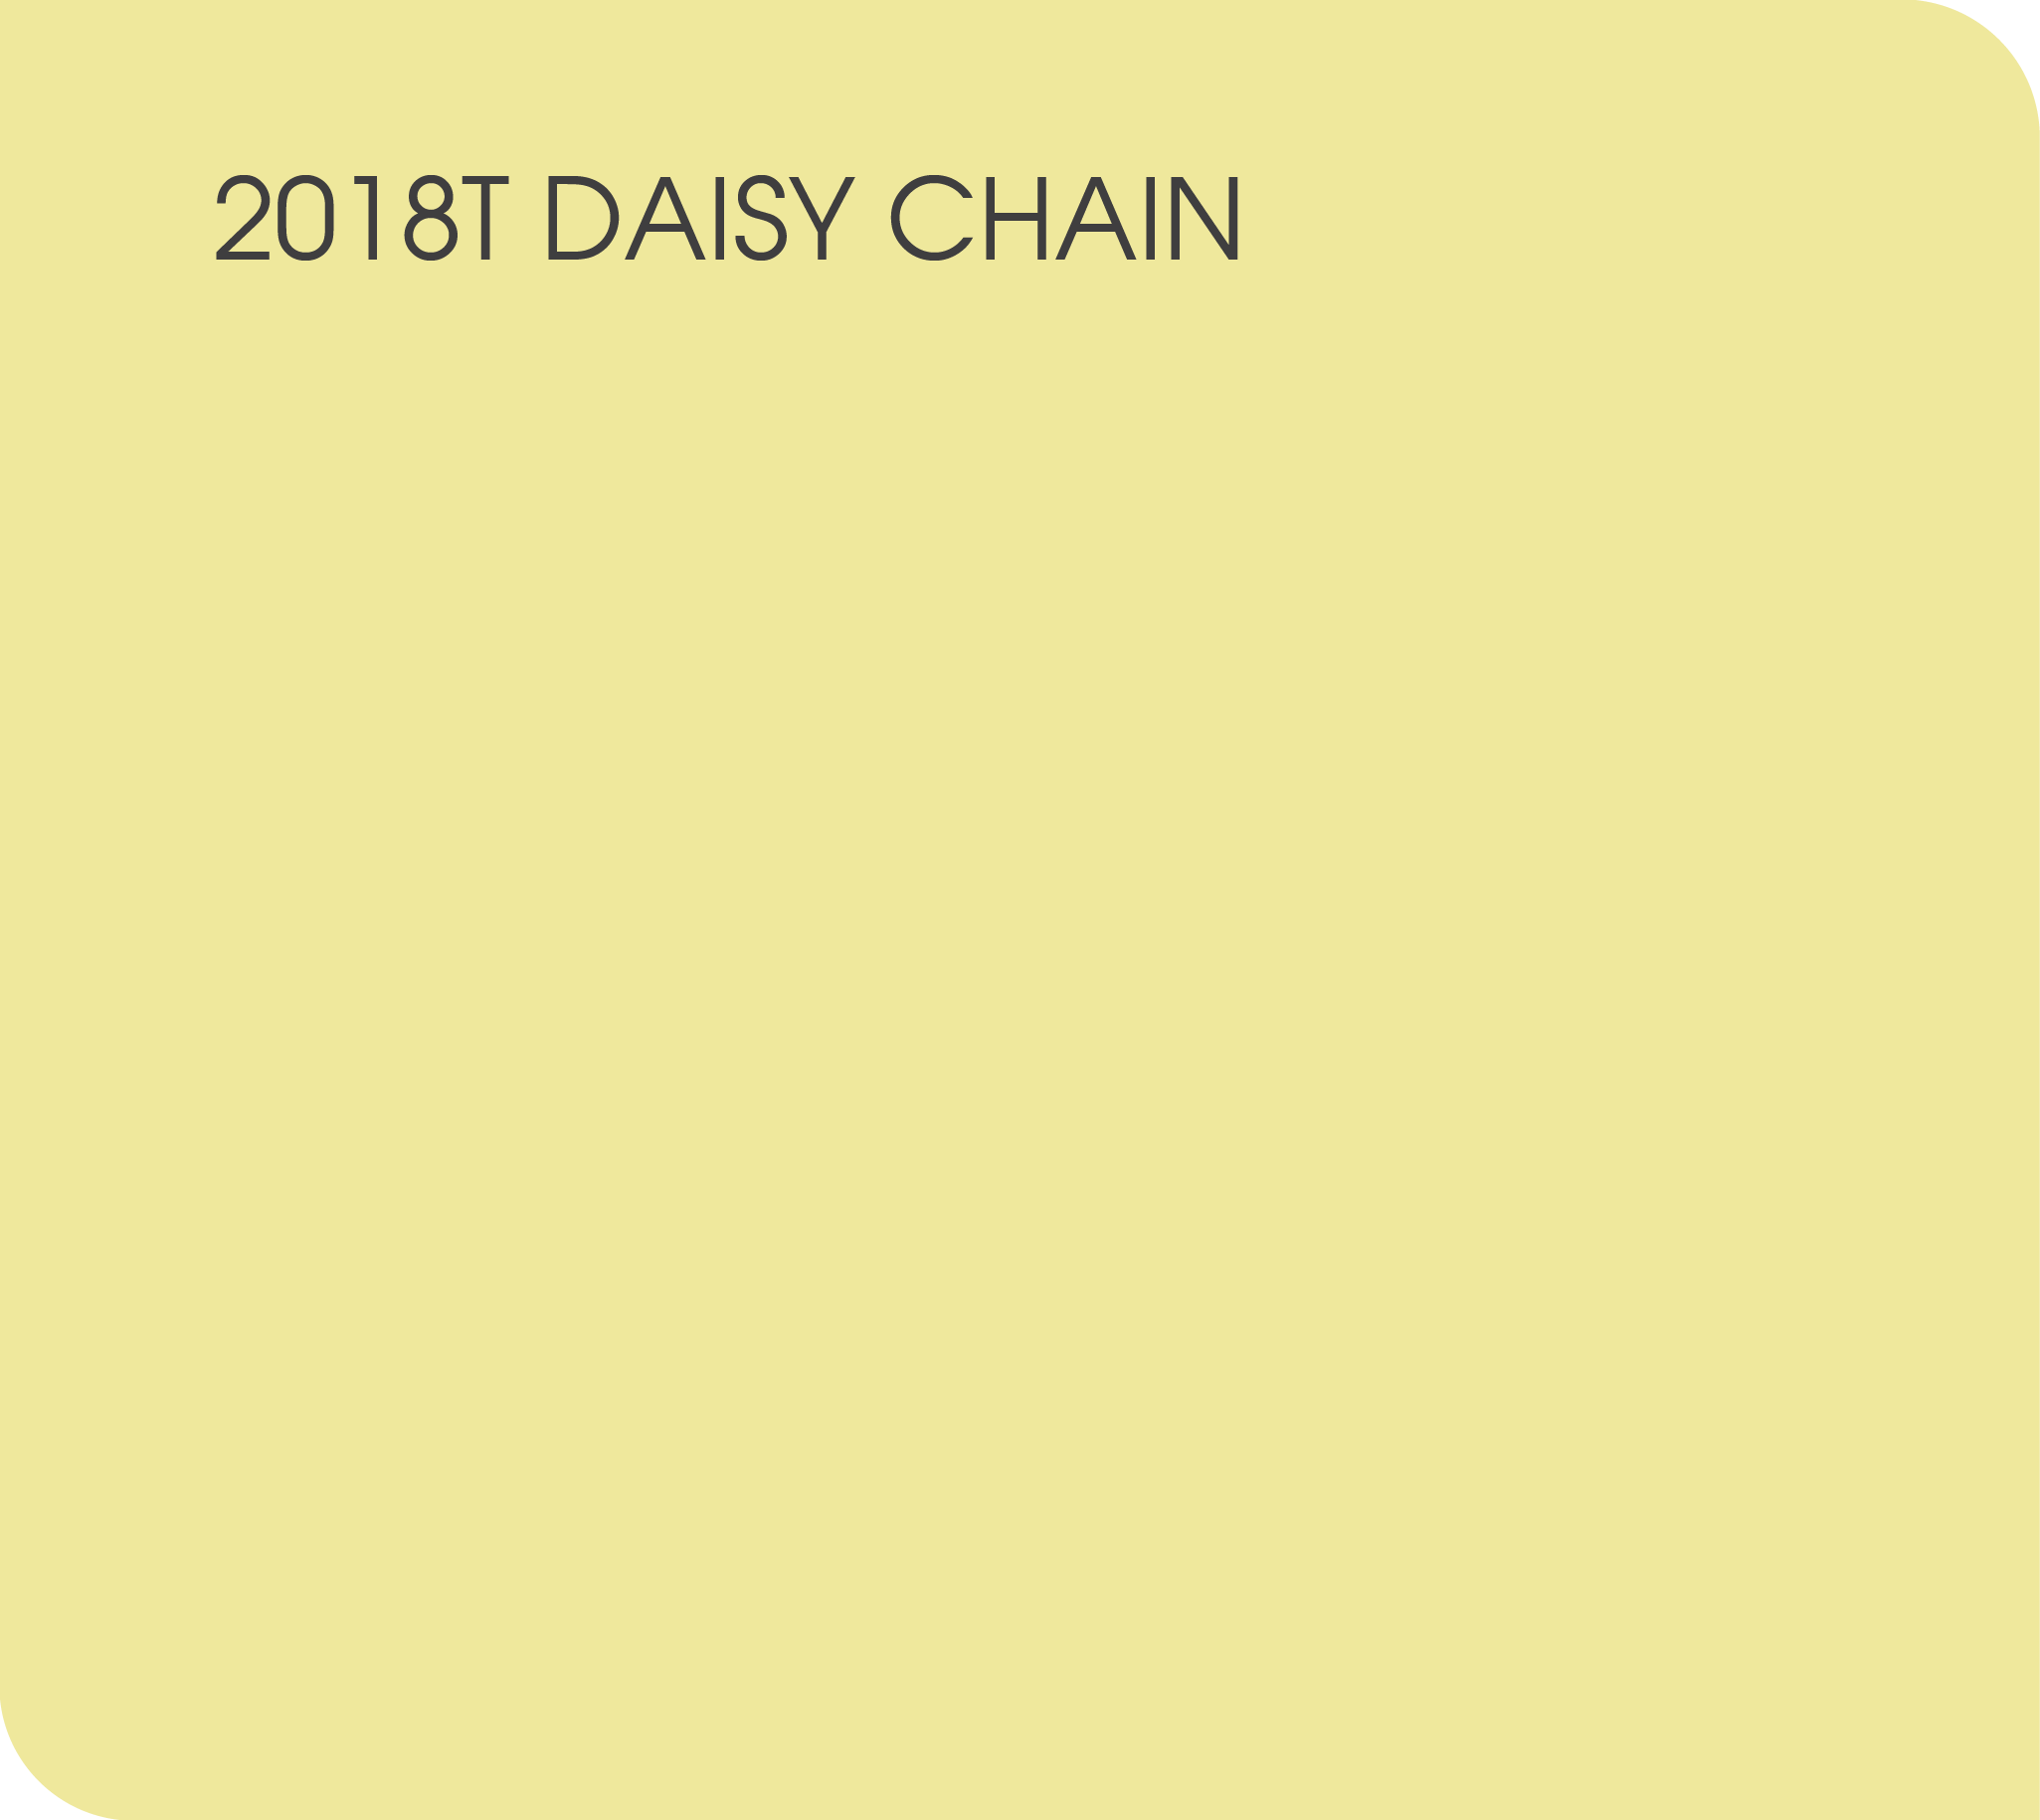 2018T Daisy chain